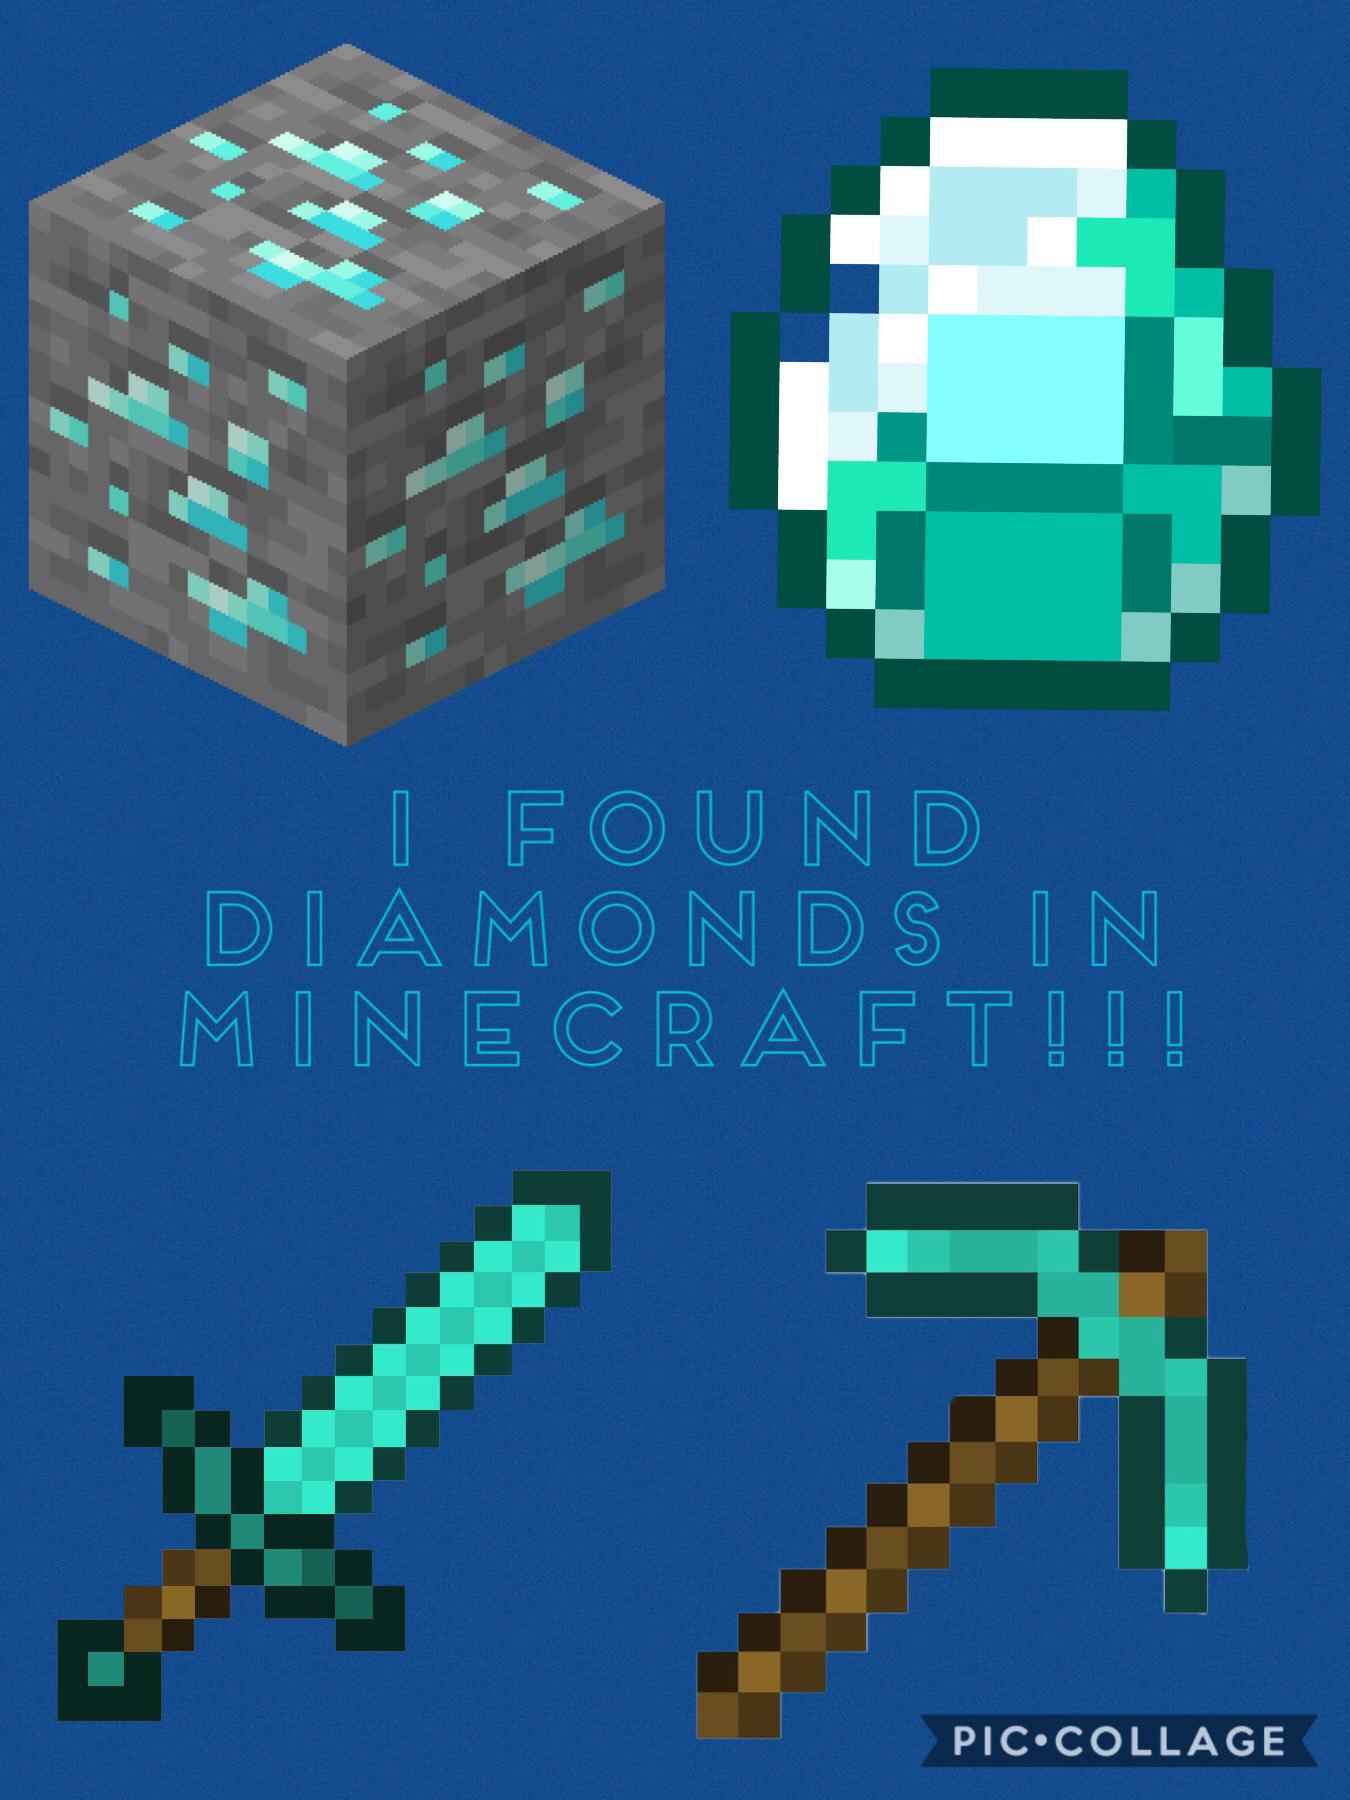 Minecraft diamonds!!